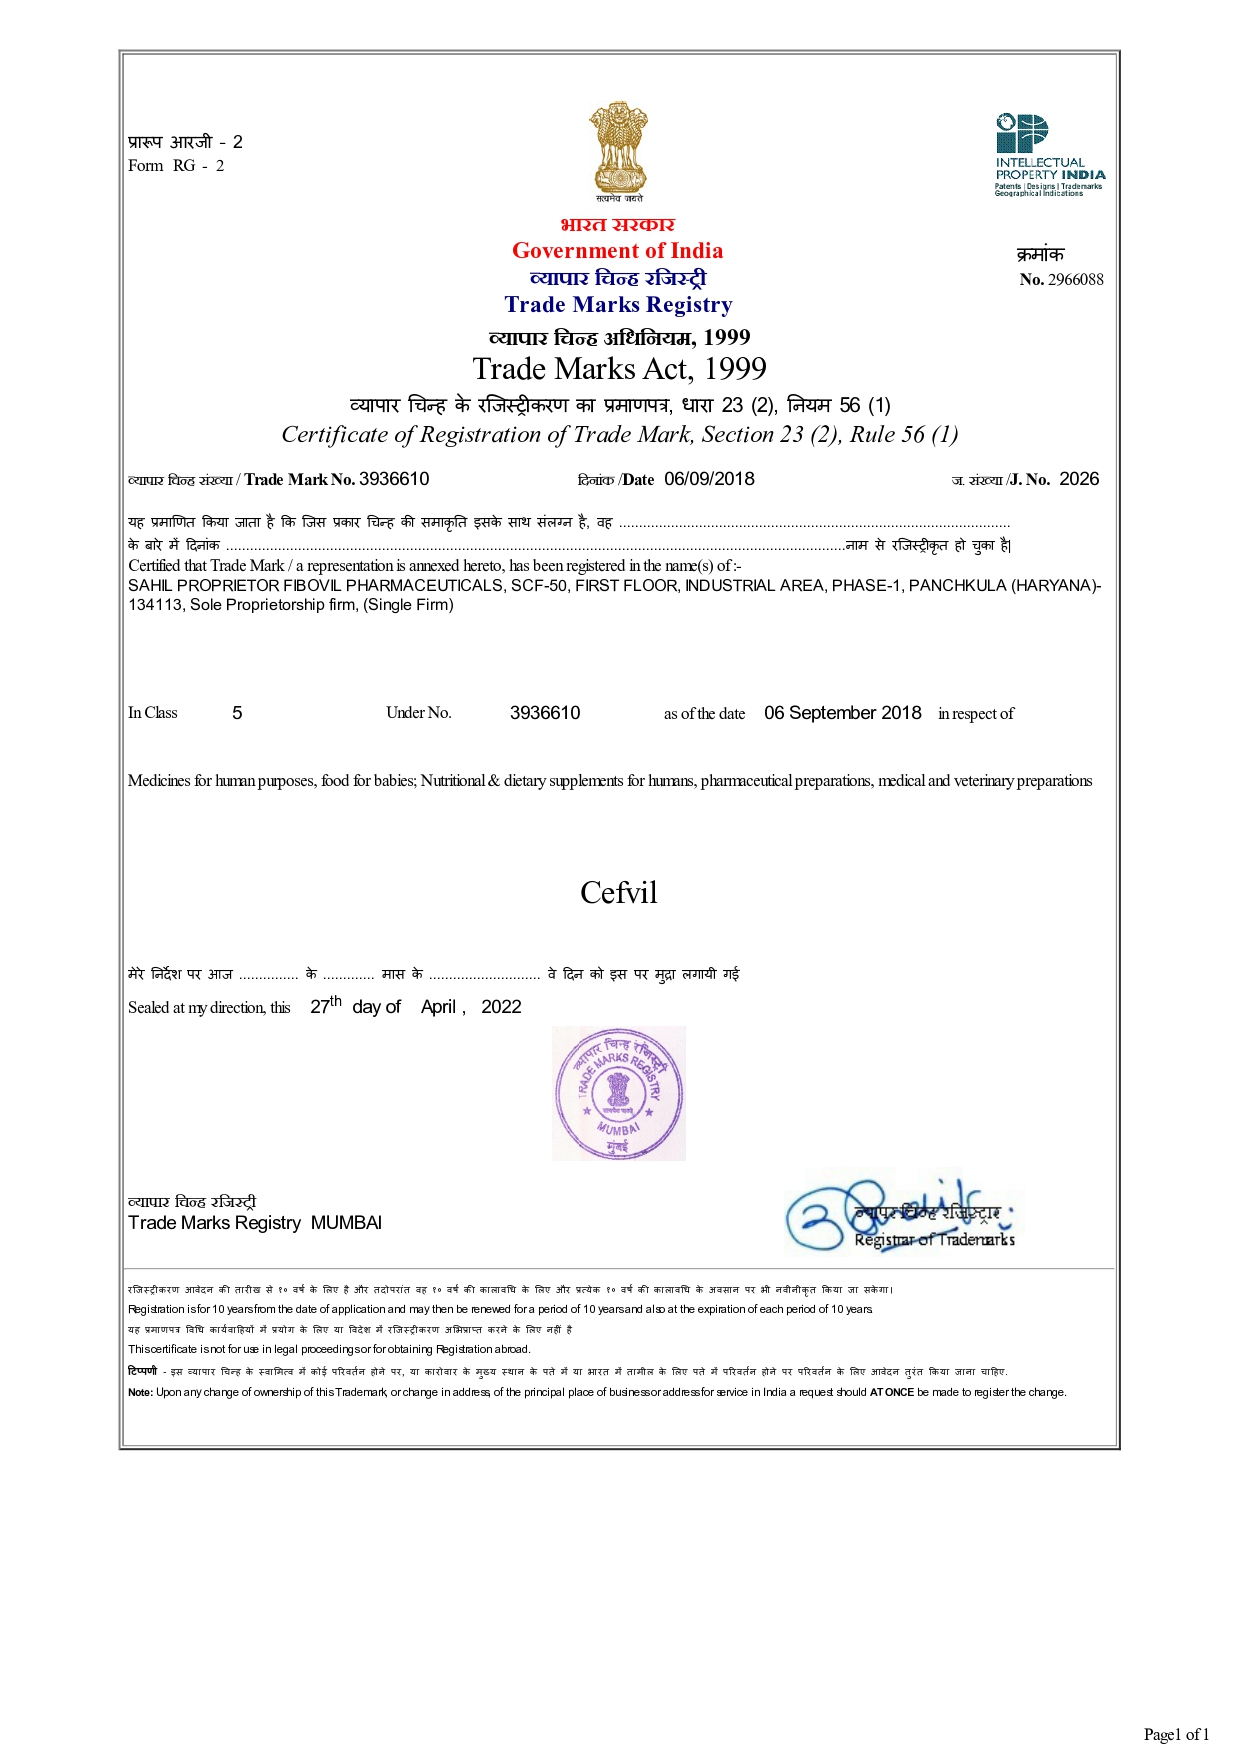 Registered Certificate of CEFVIL